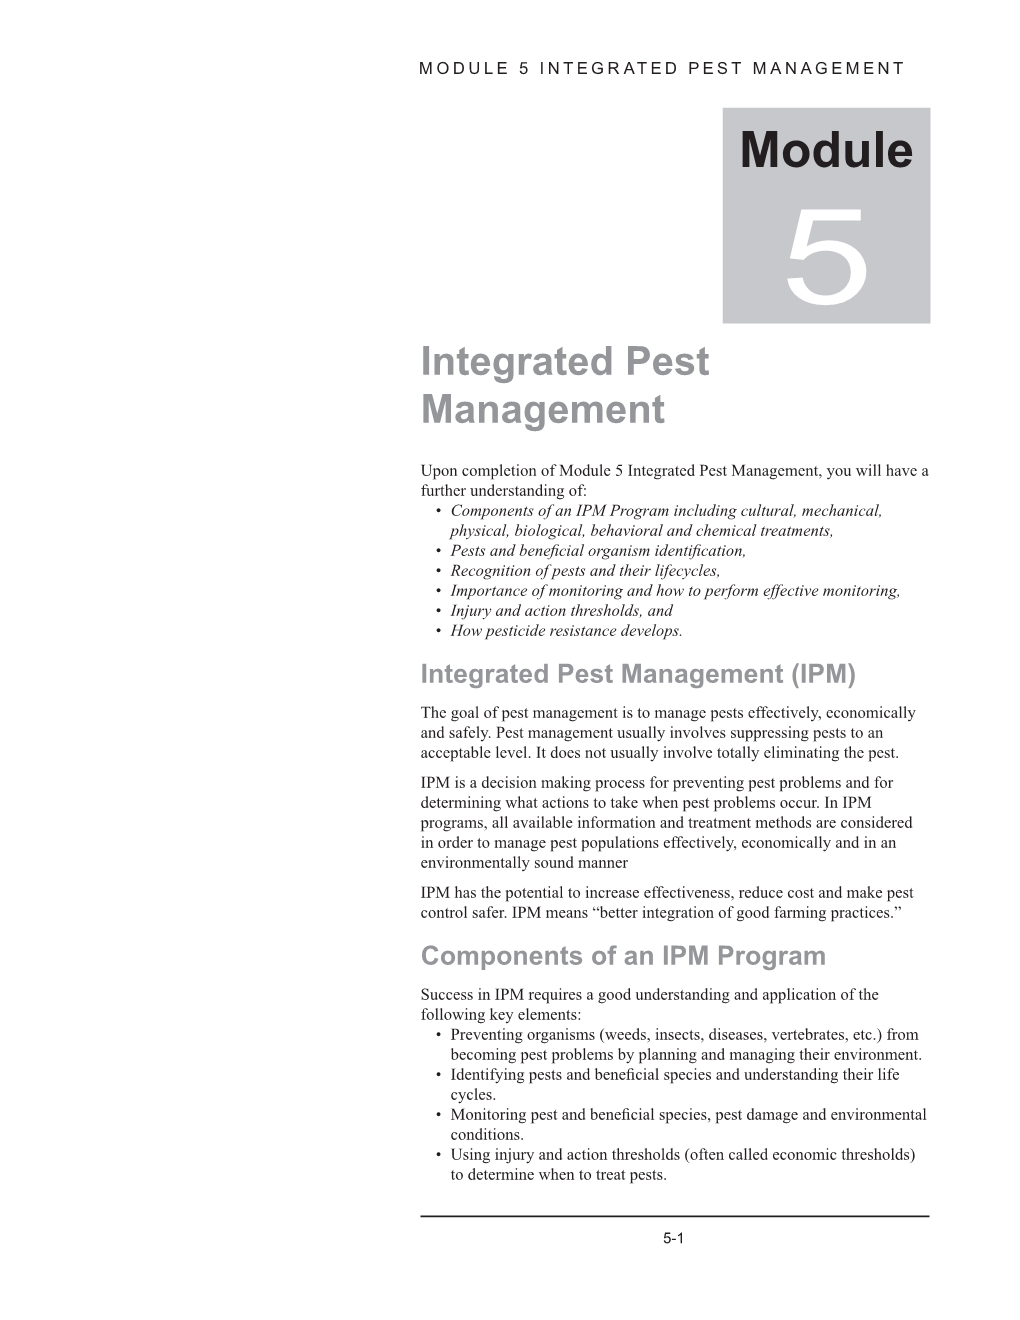 Module 5 Integrated Pest Management